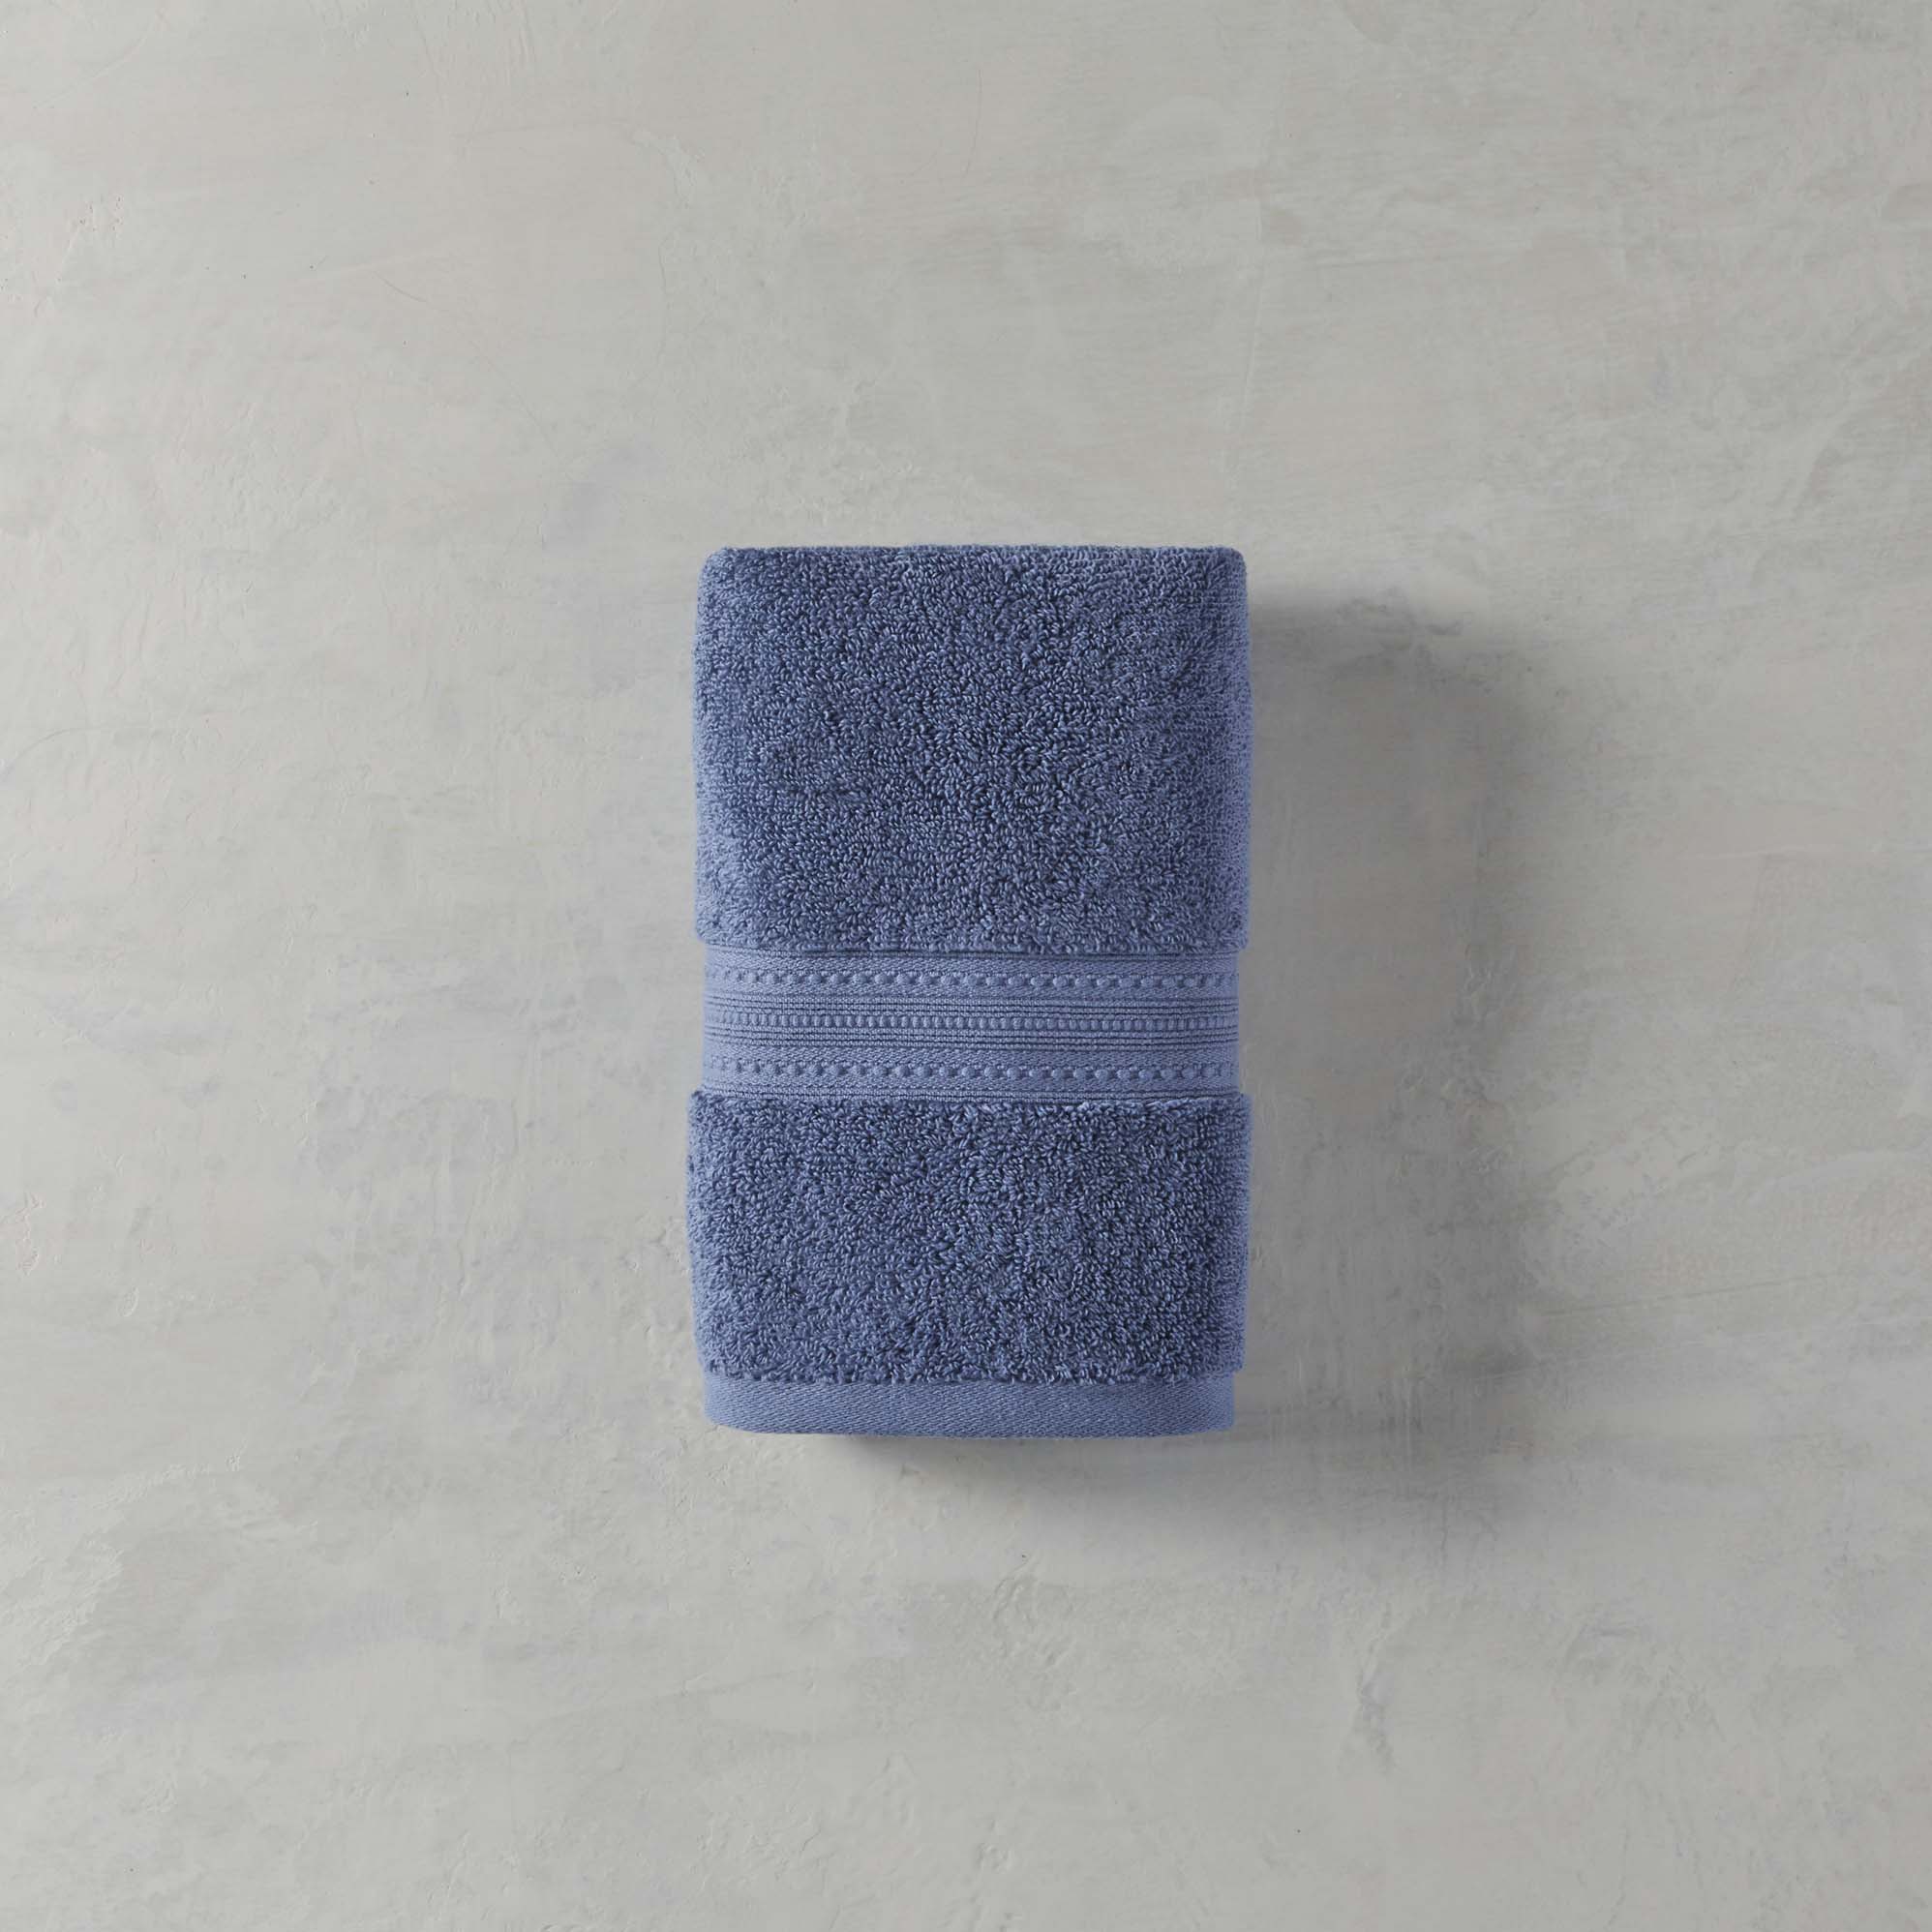 Better Homes & Gardens Signature Soft Hand Towel, Insignia Blue - image 1 of 6